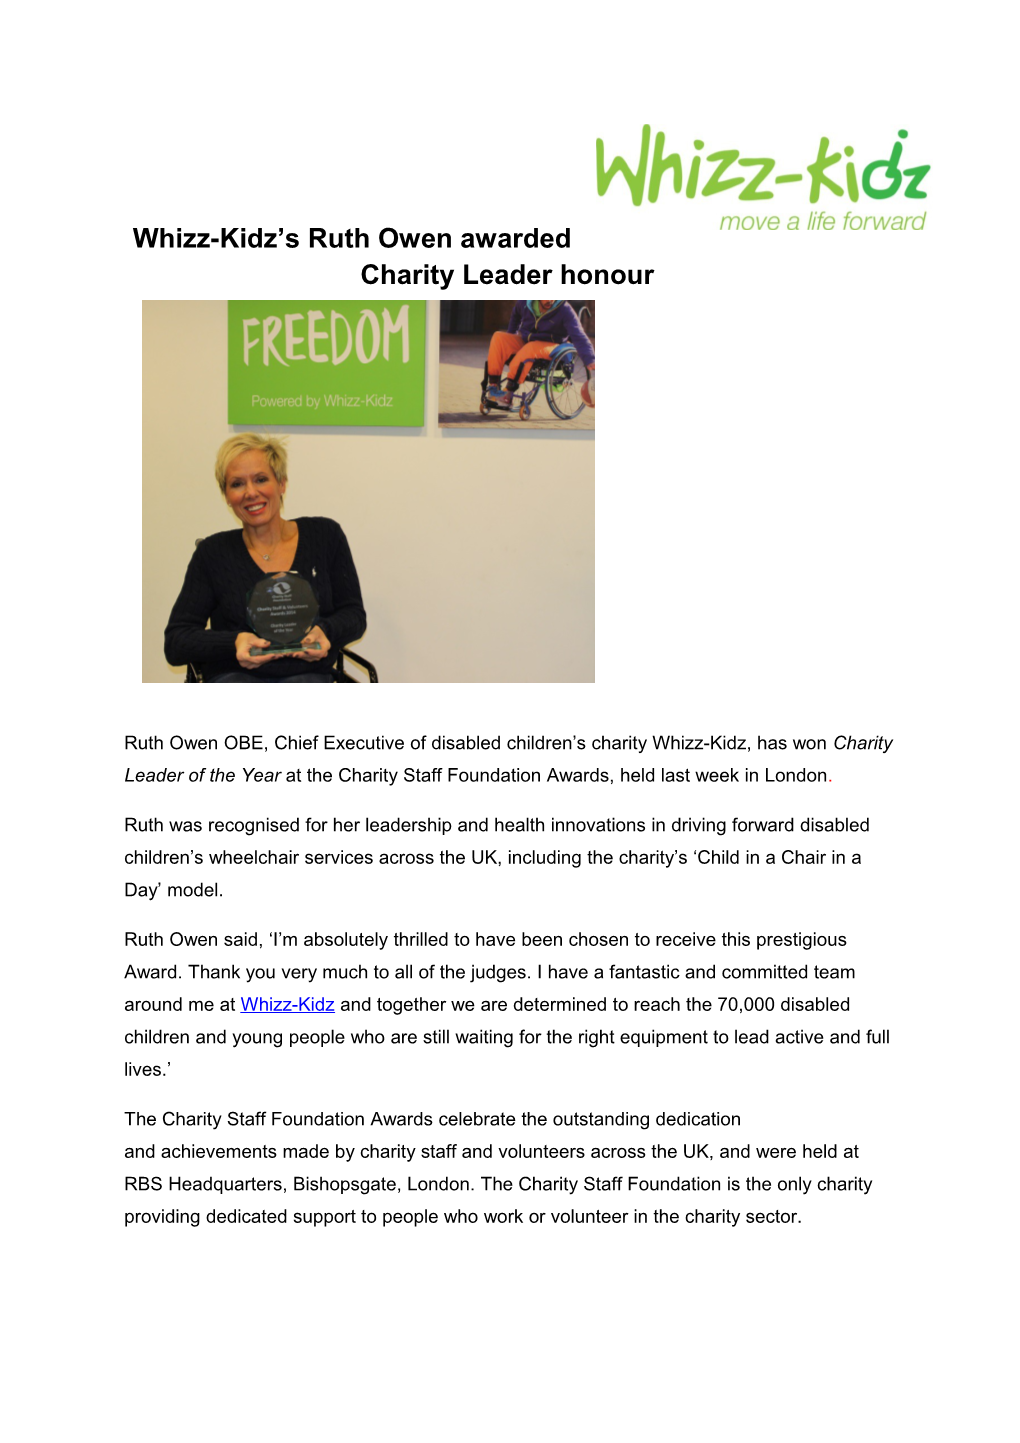 Whizz-Kidz Sruth Owen Awarded Charity Leader Honour